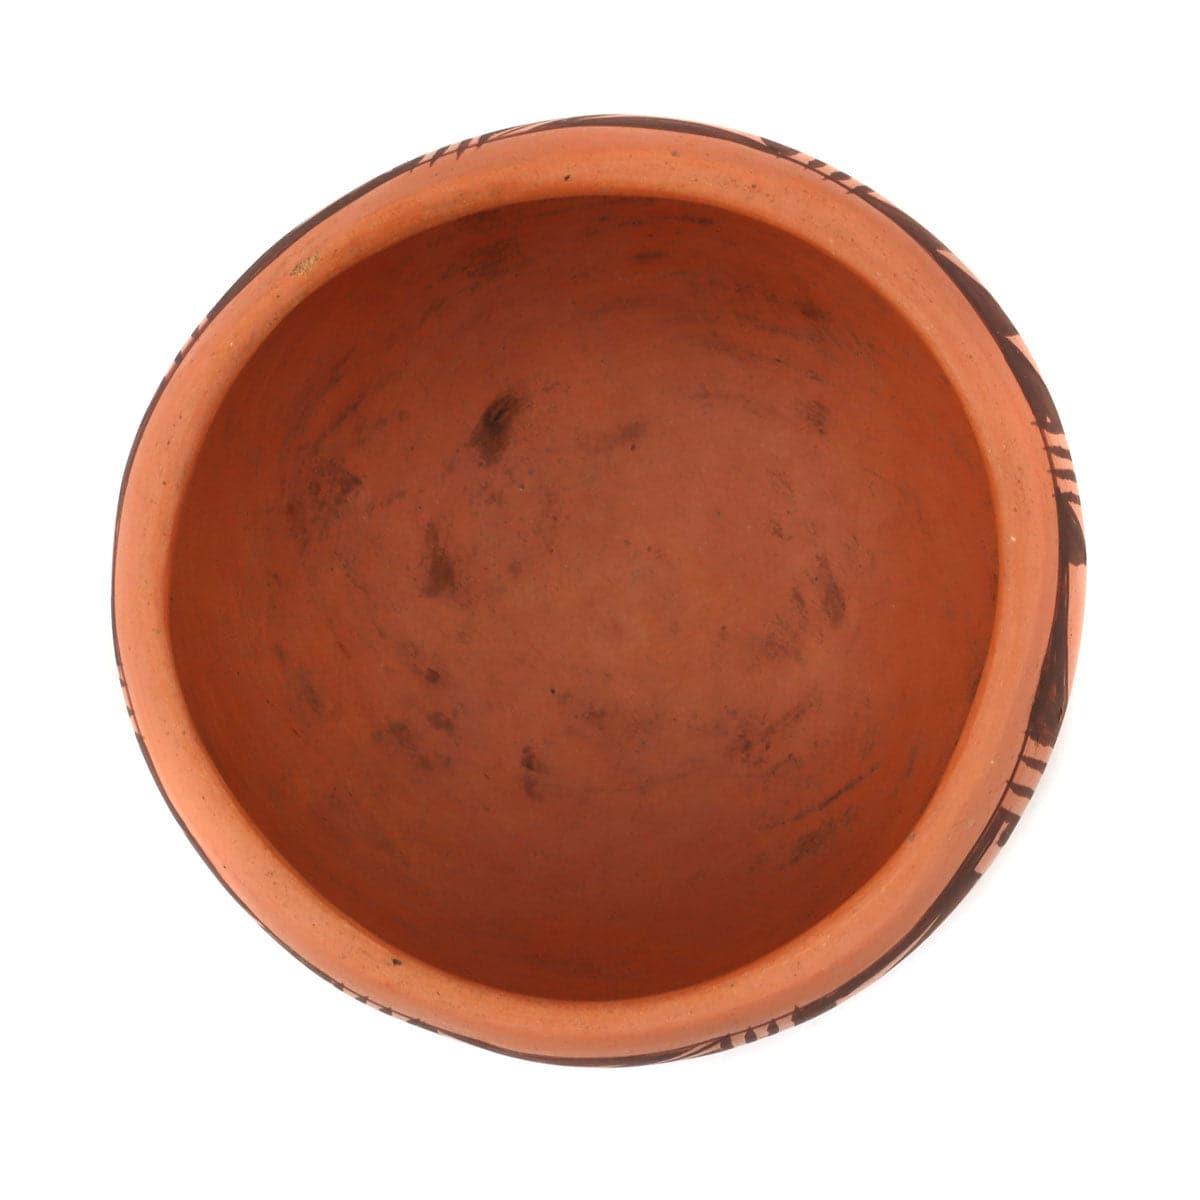 Hopi Redware Bowl c. 1960-80s, 3" x 4.625" (P3467) 4